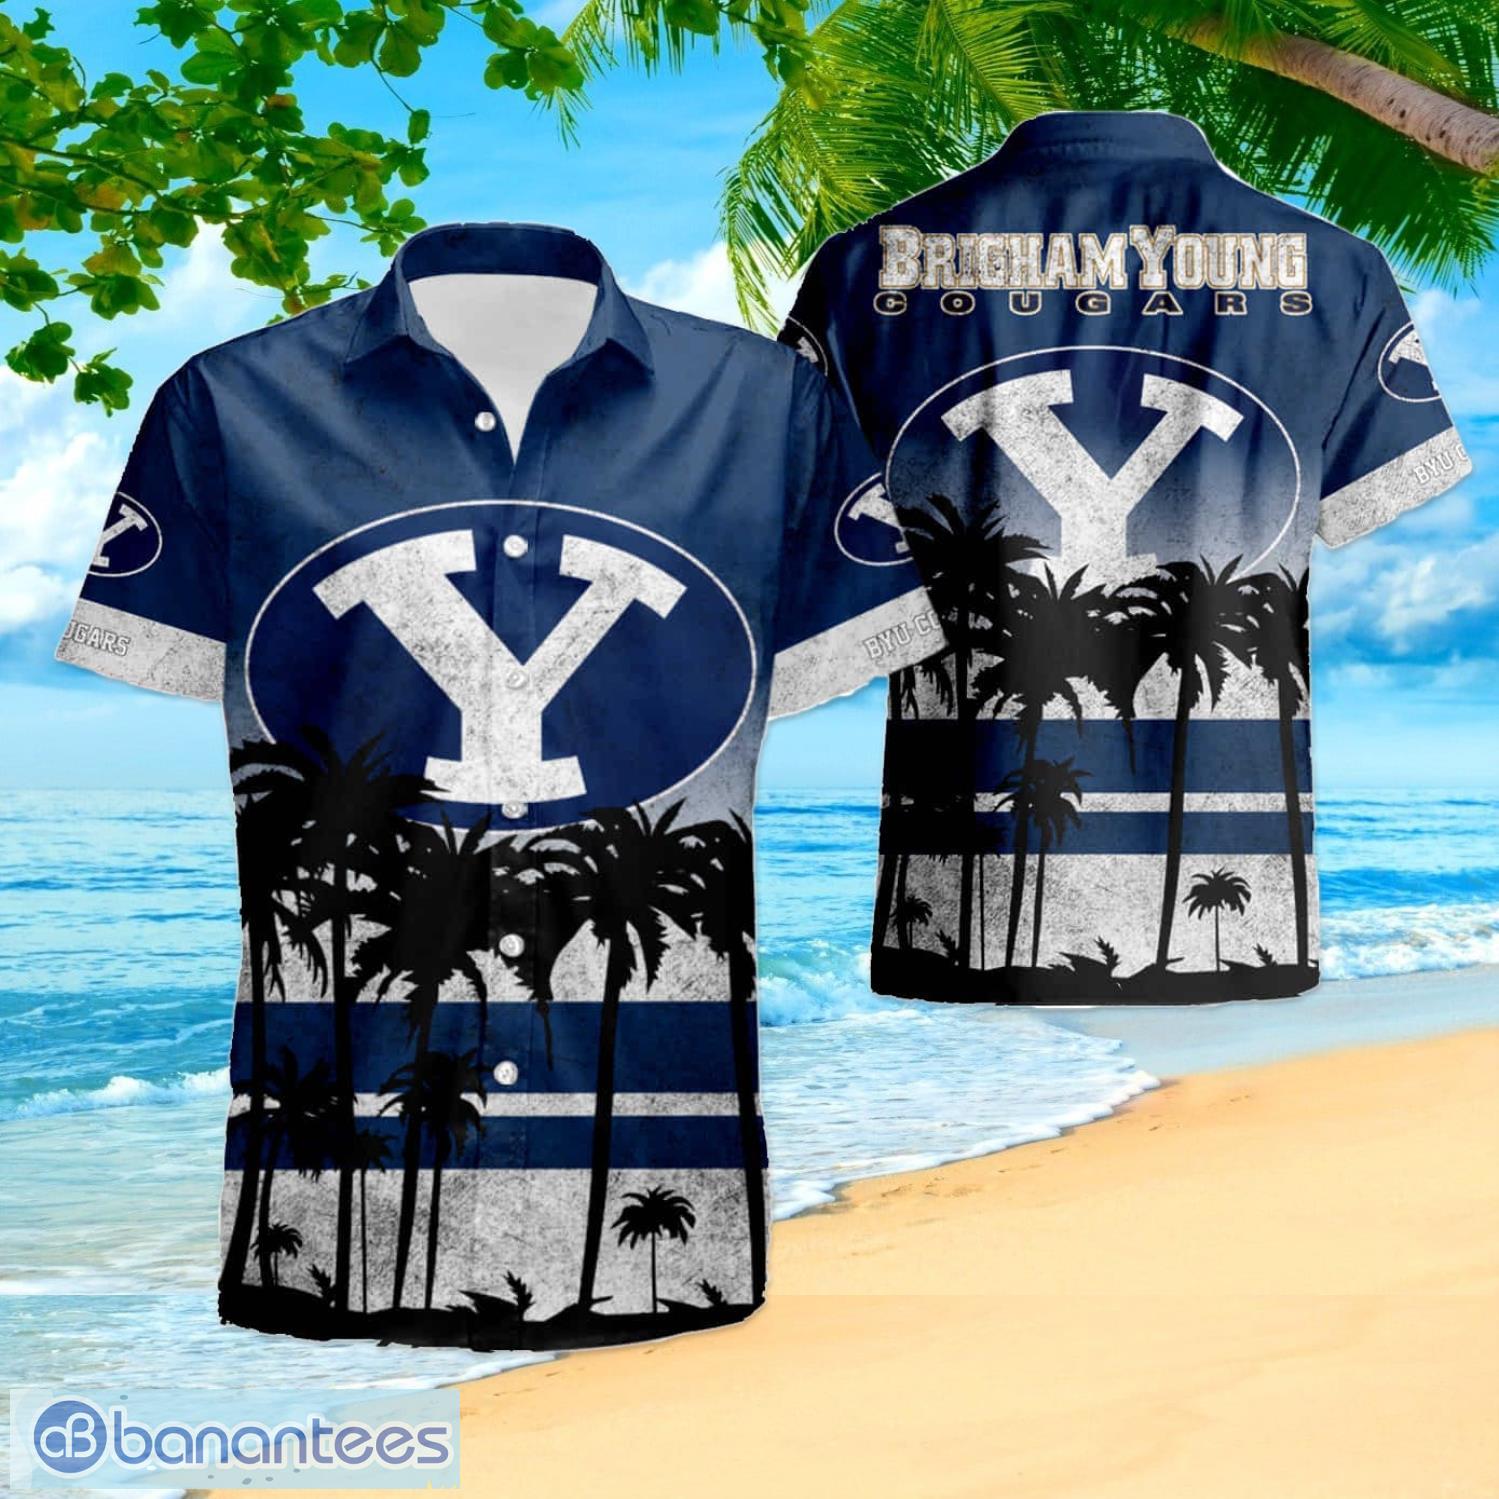 San Jose Sharks NHL Hawaii Shirt & Short Style Hot Trending Summer